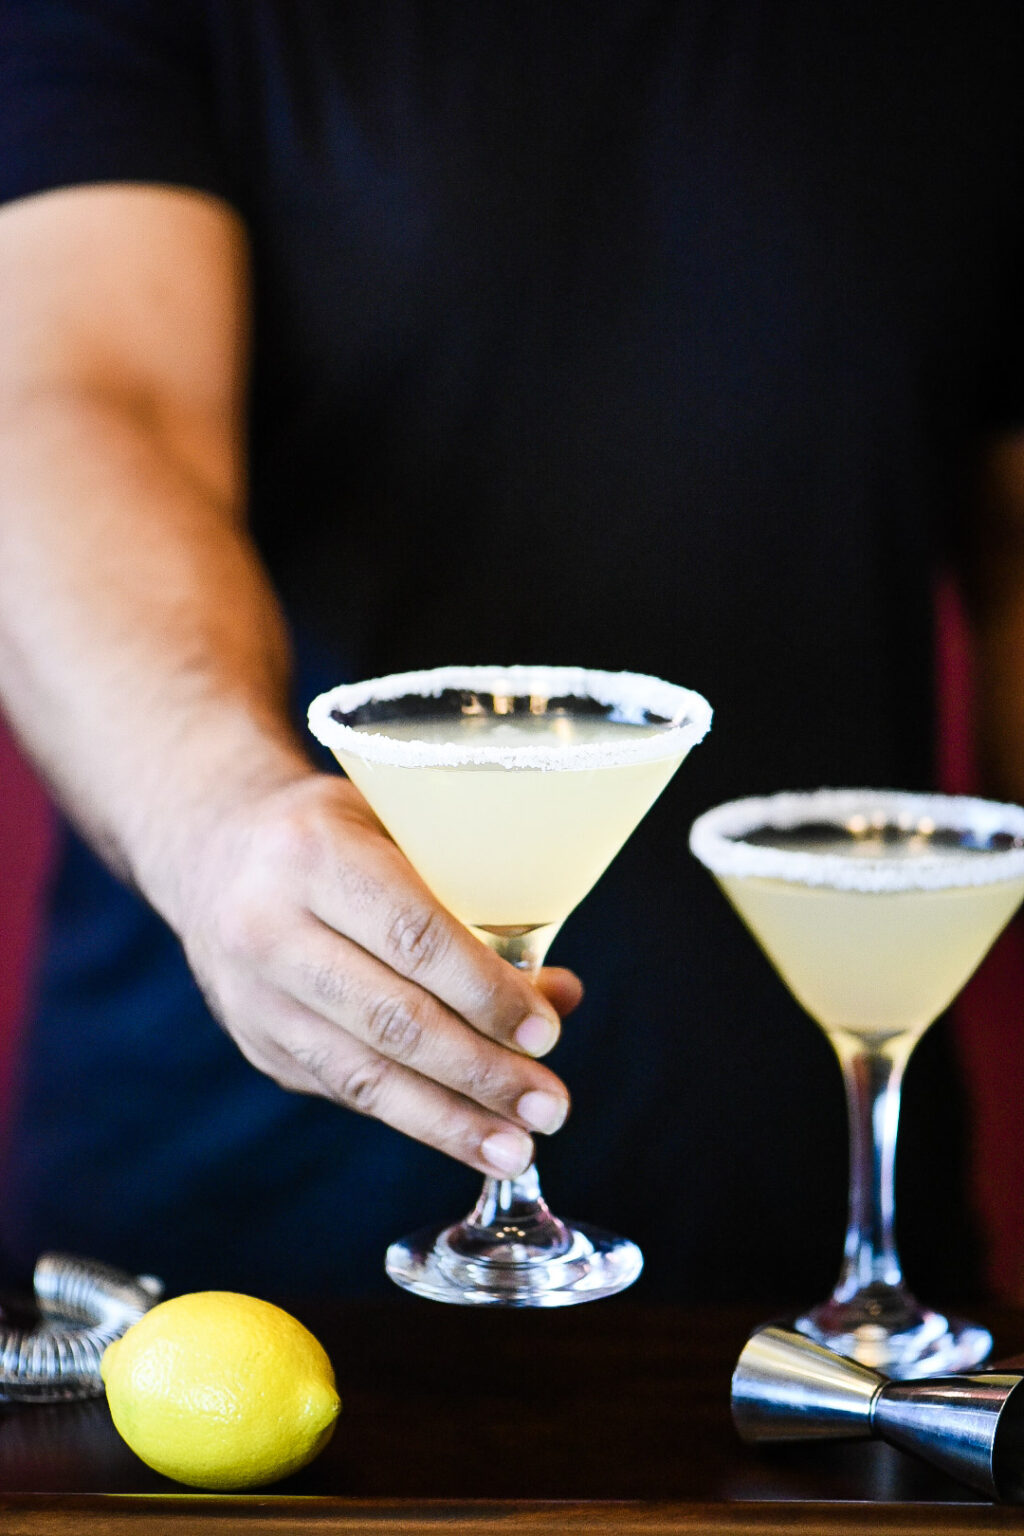 Best Lemon Drop Martini Cocktail Recipe